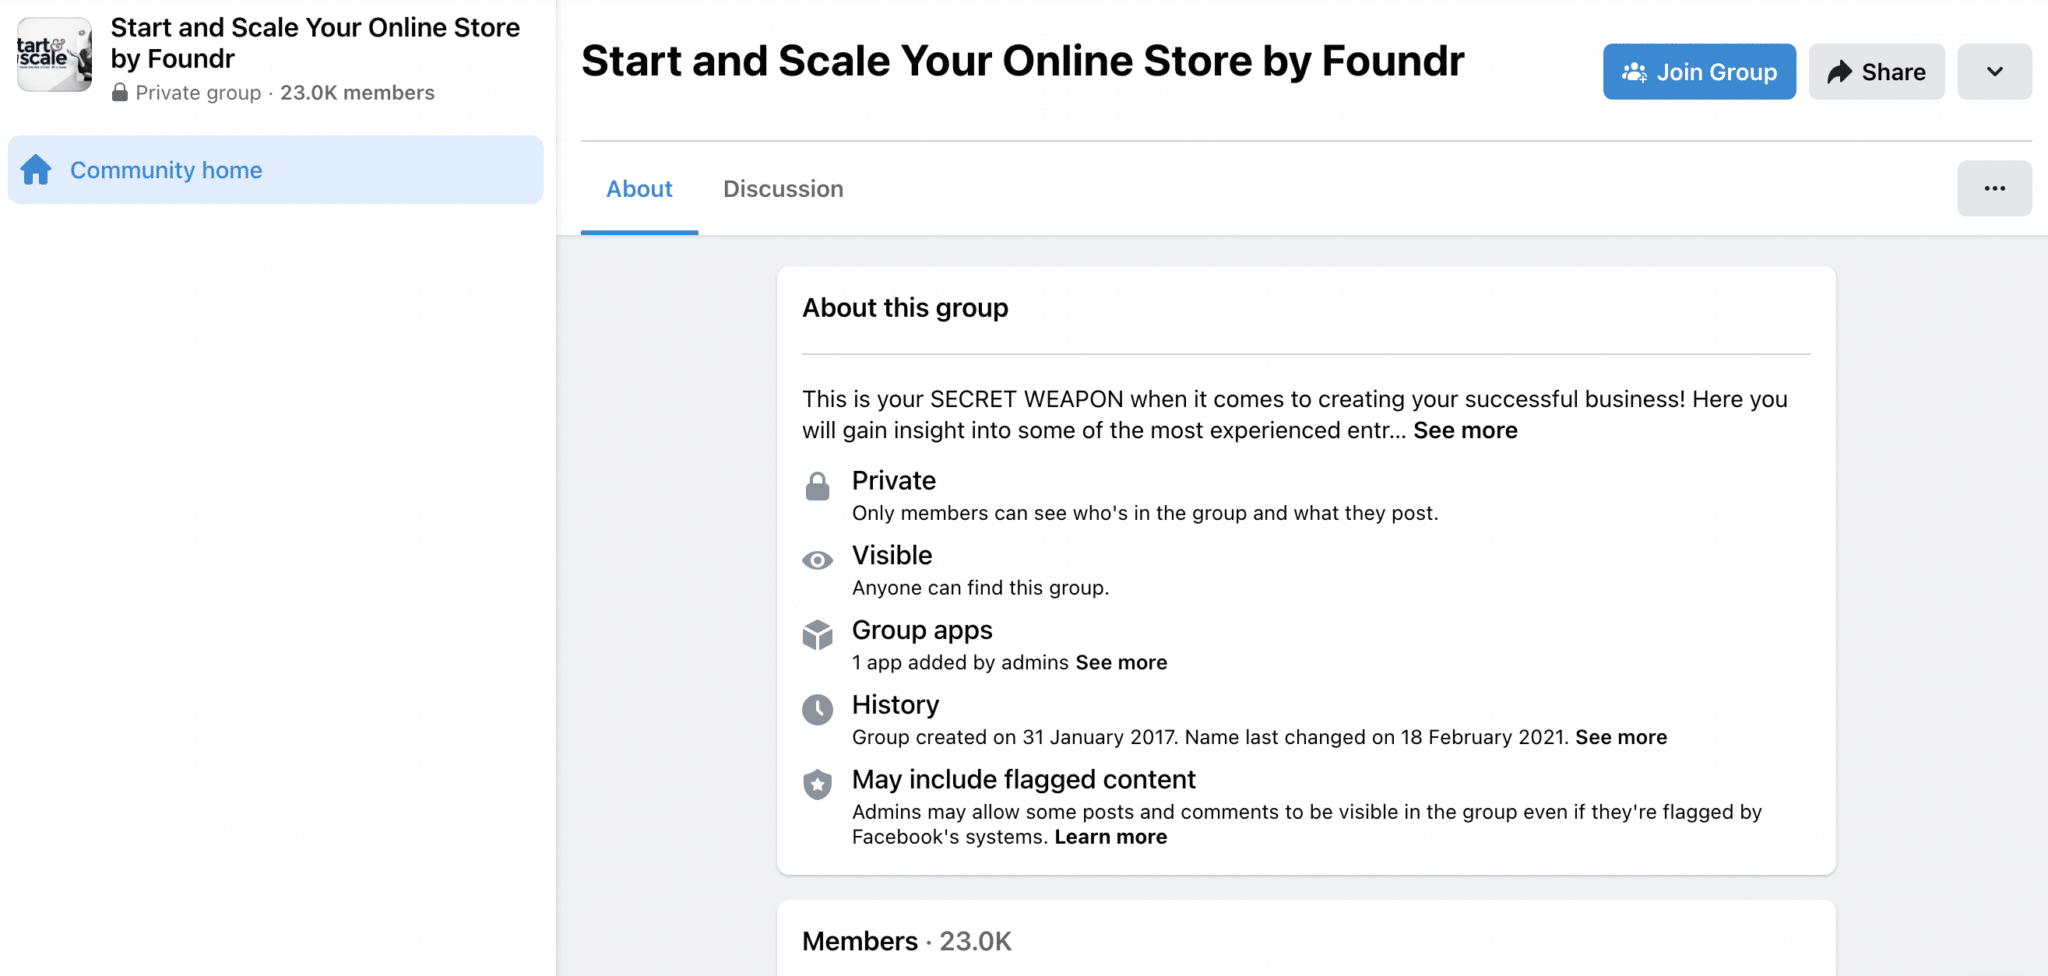 Foundr's Facebook group